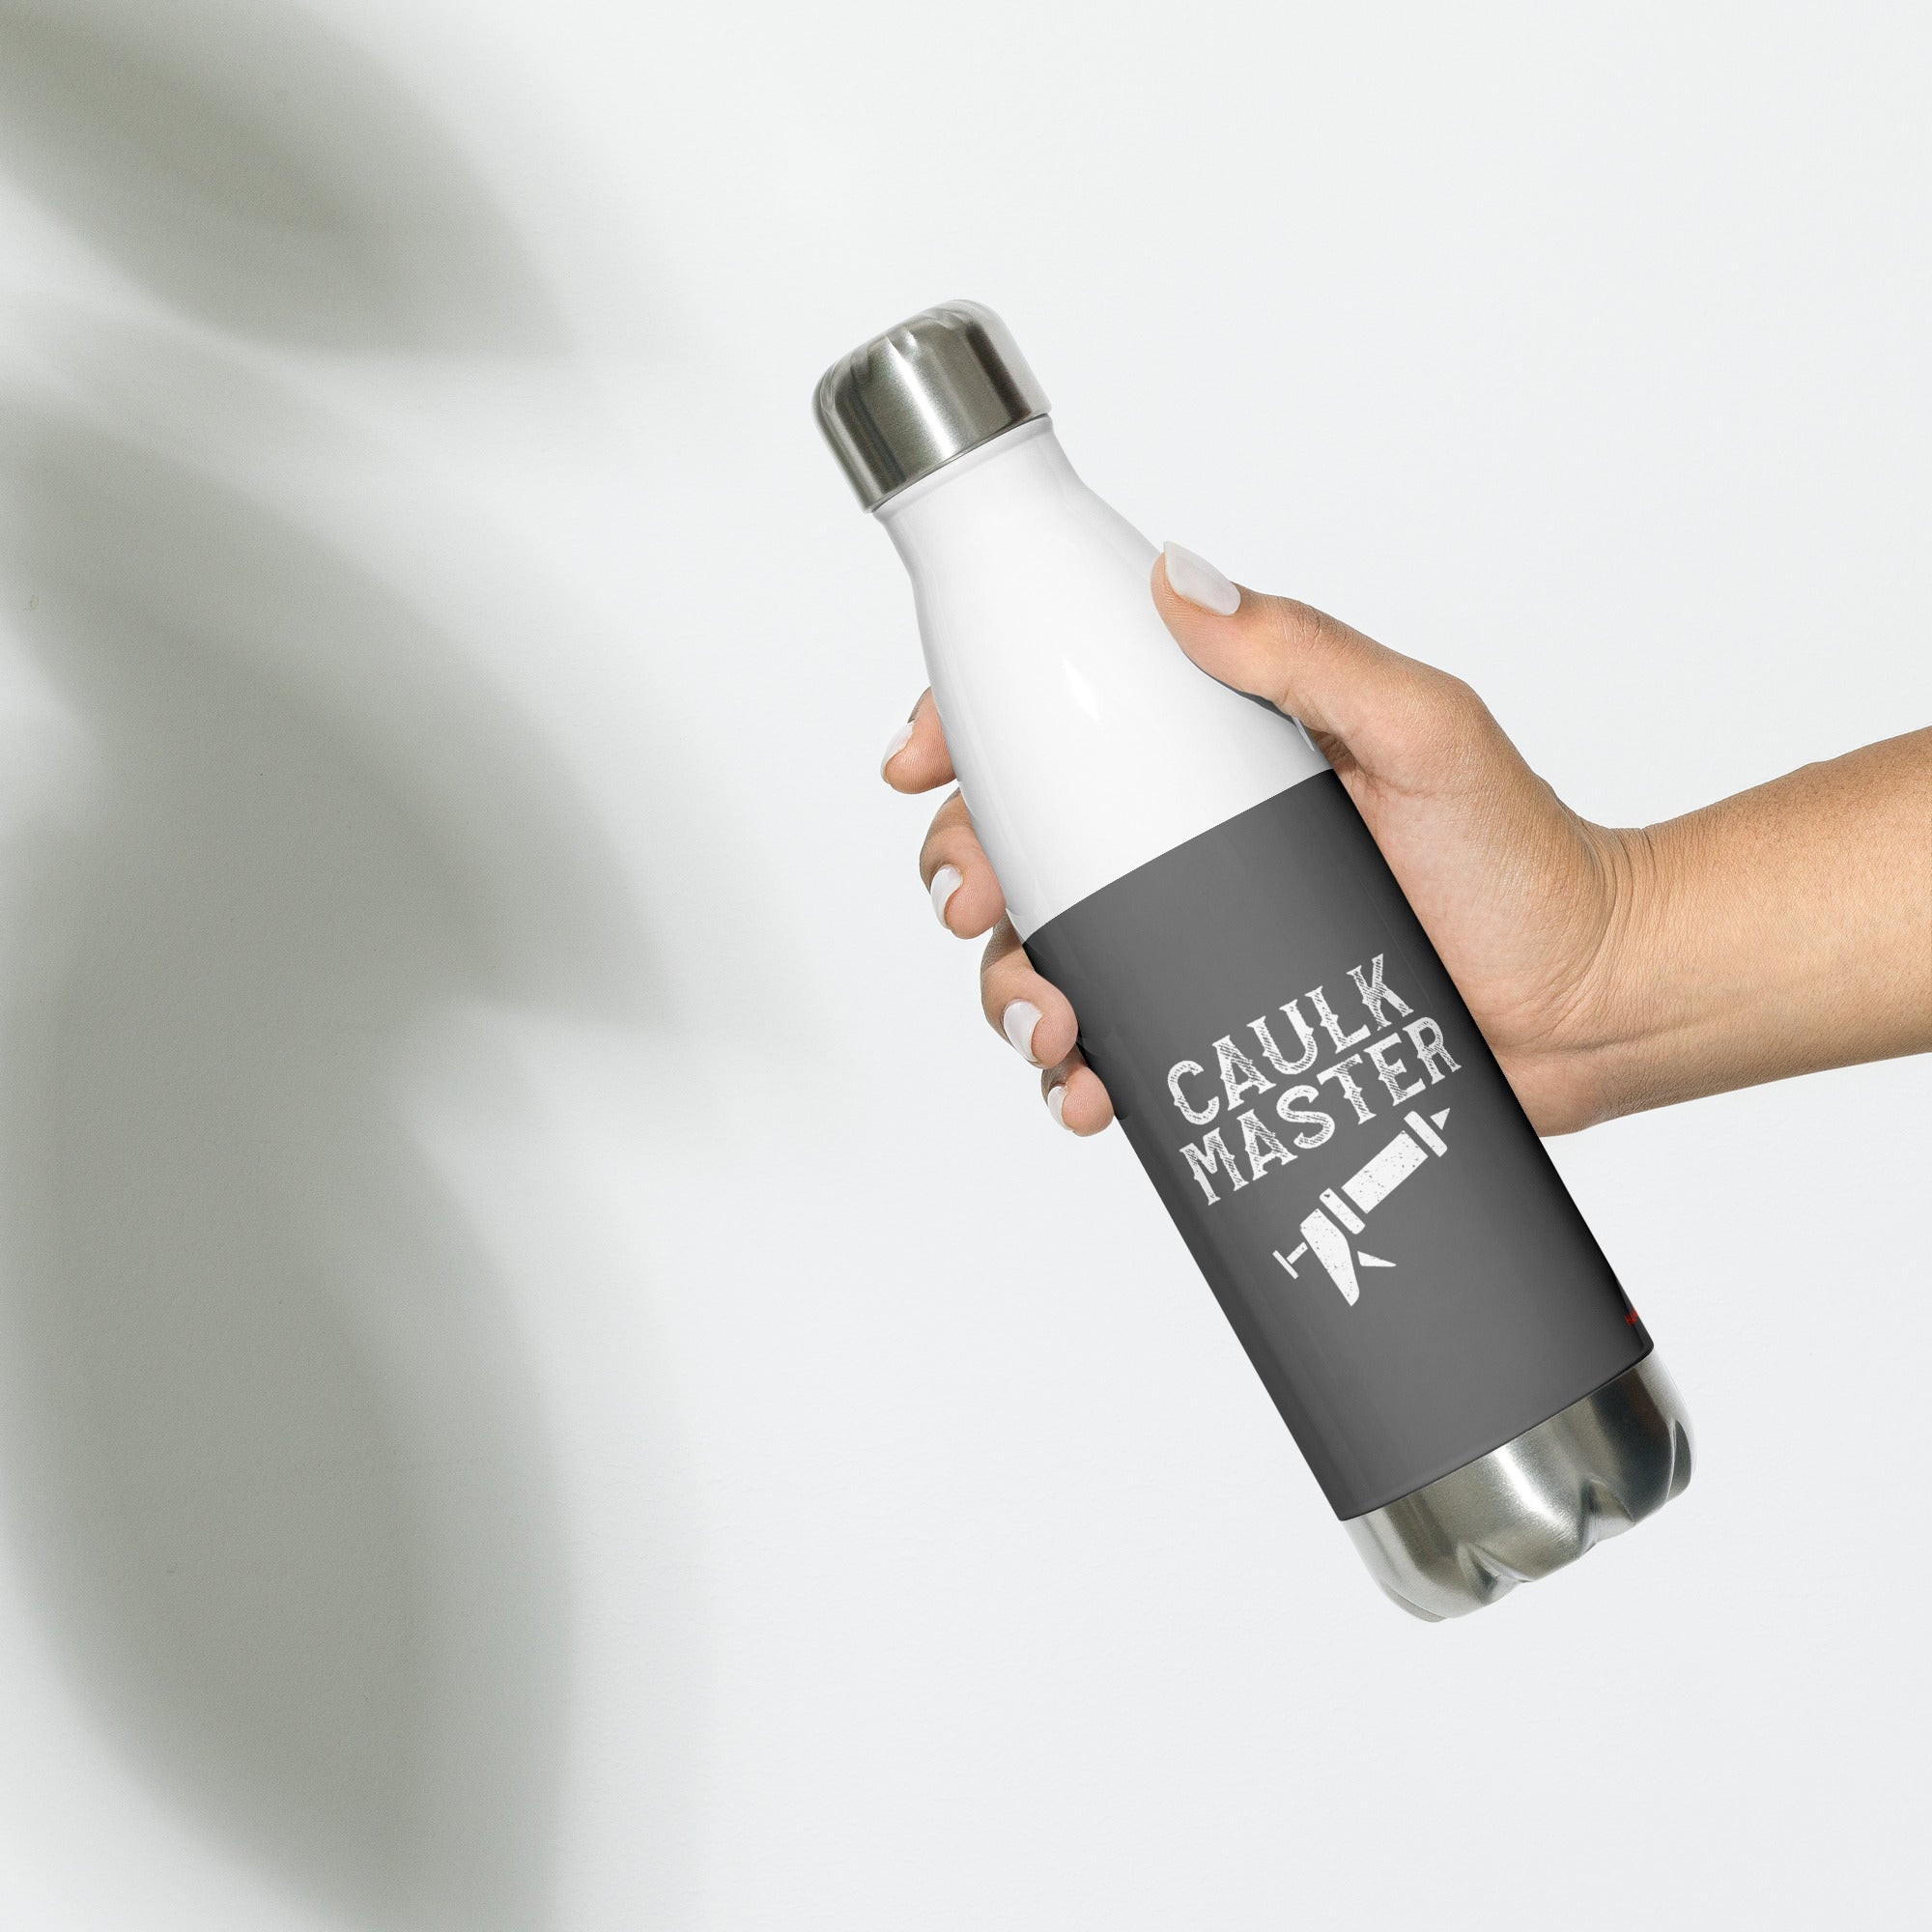 Caulk Master Stainless Steel Water Bottle